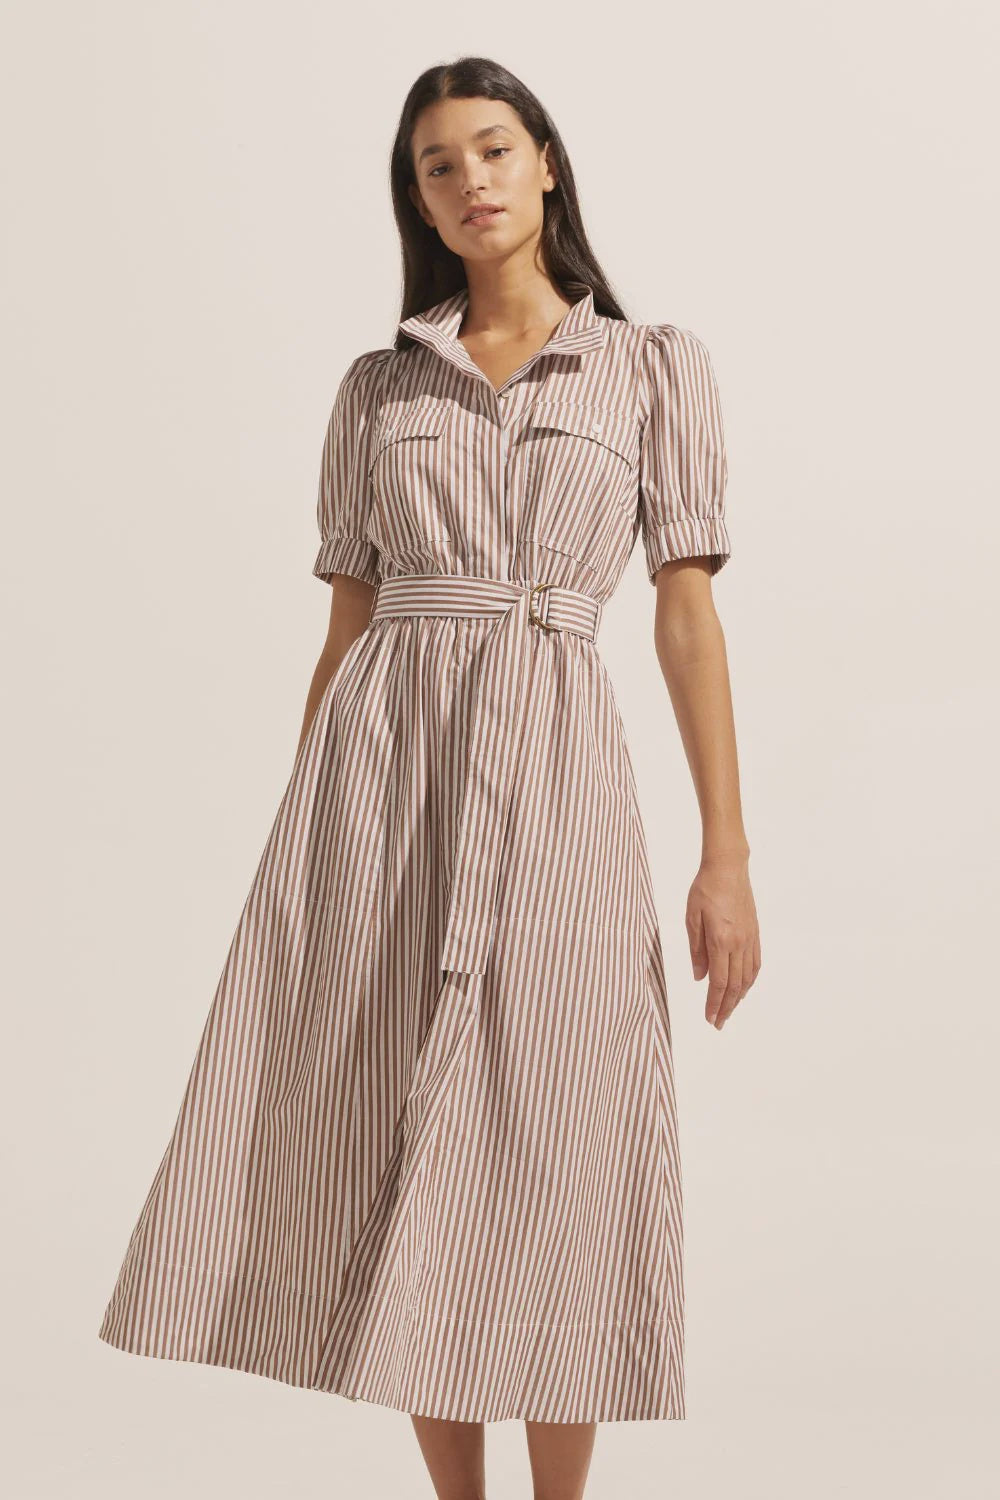 Starling Dress - Mocha Stripe Dresses Zoe Kratzmann   